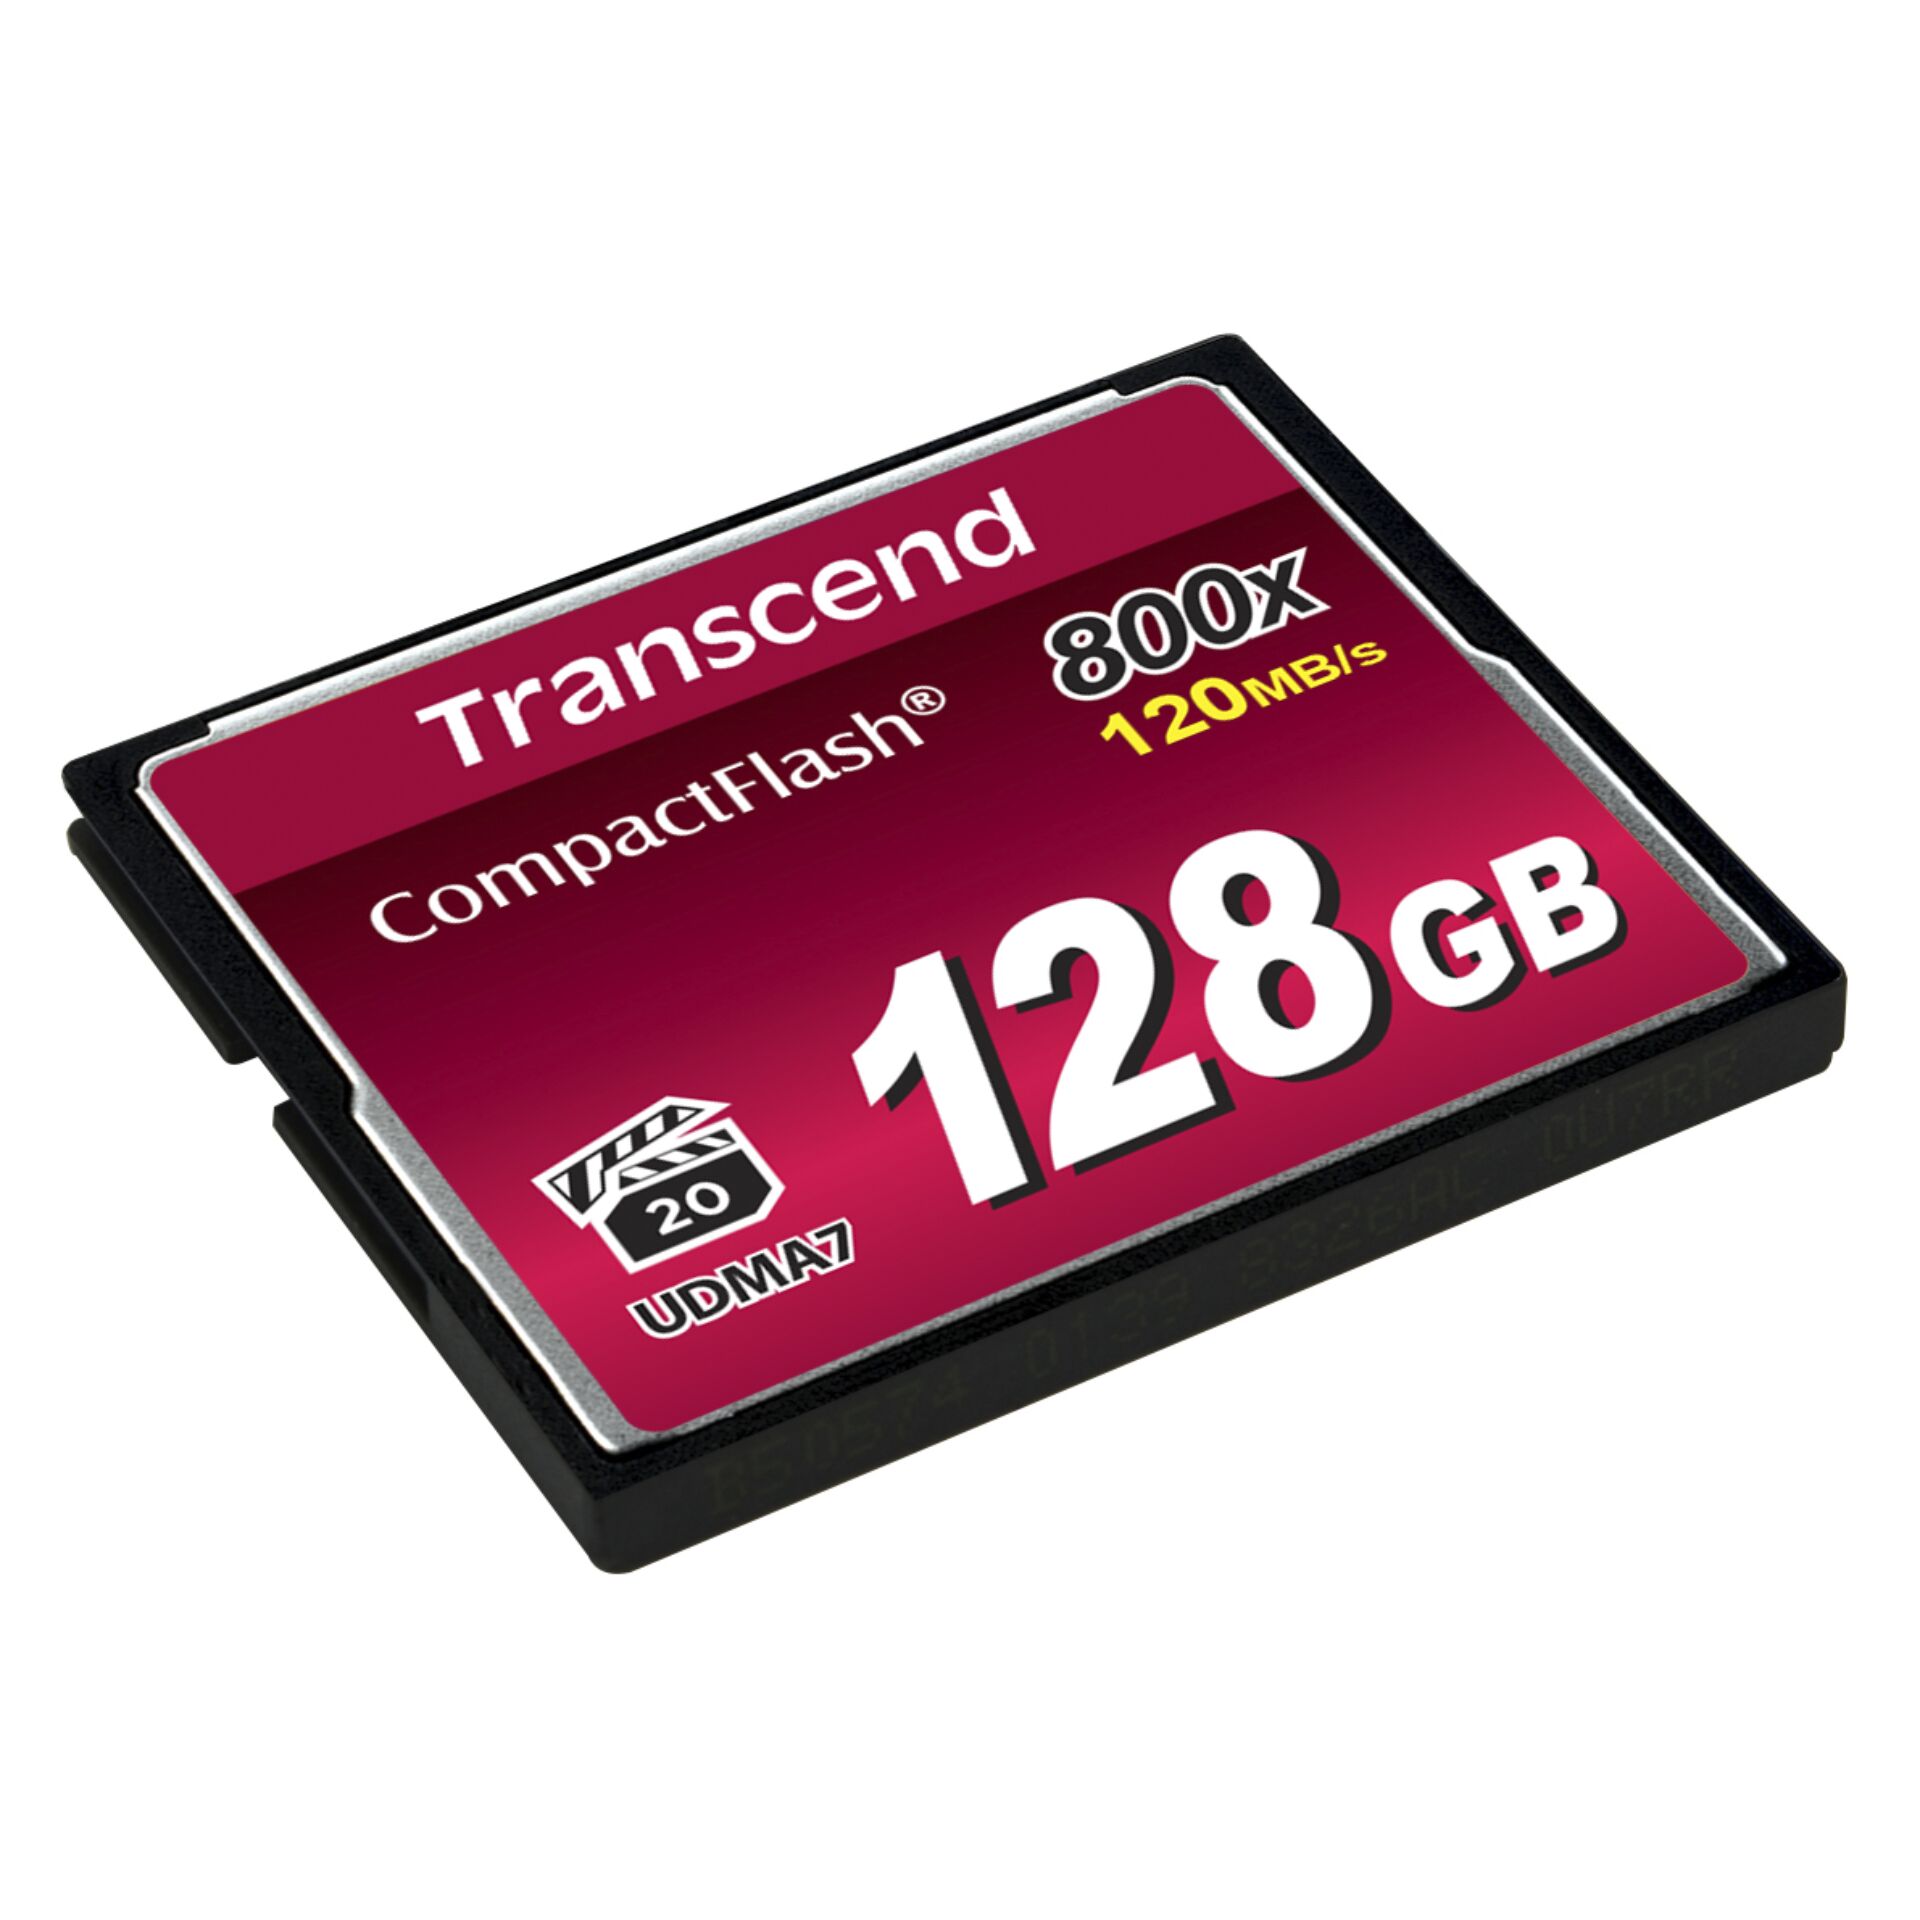 Transcend Compact Flash    128GB 800x